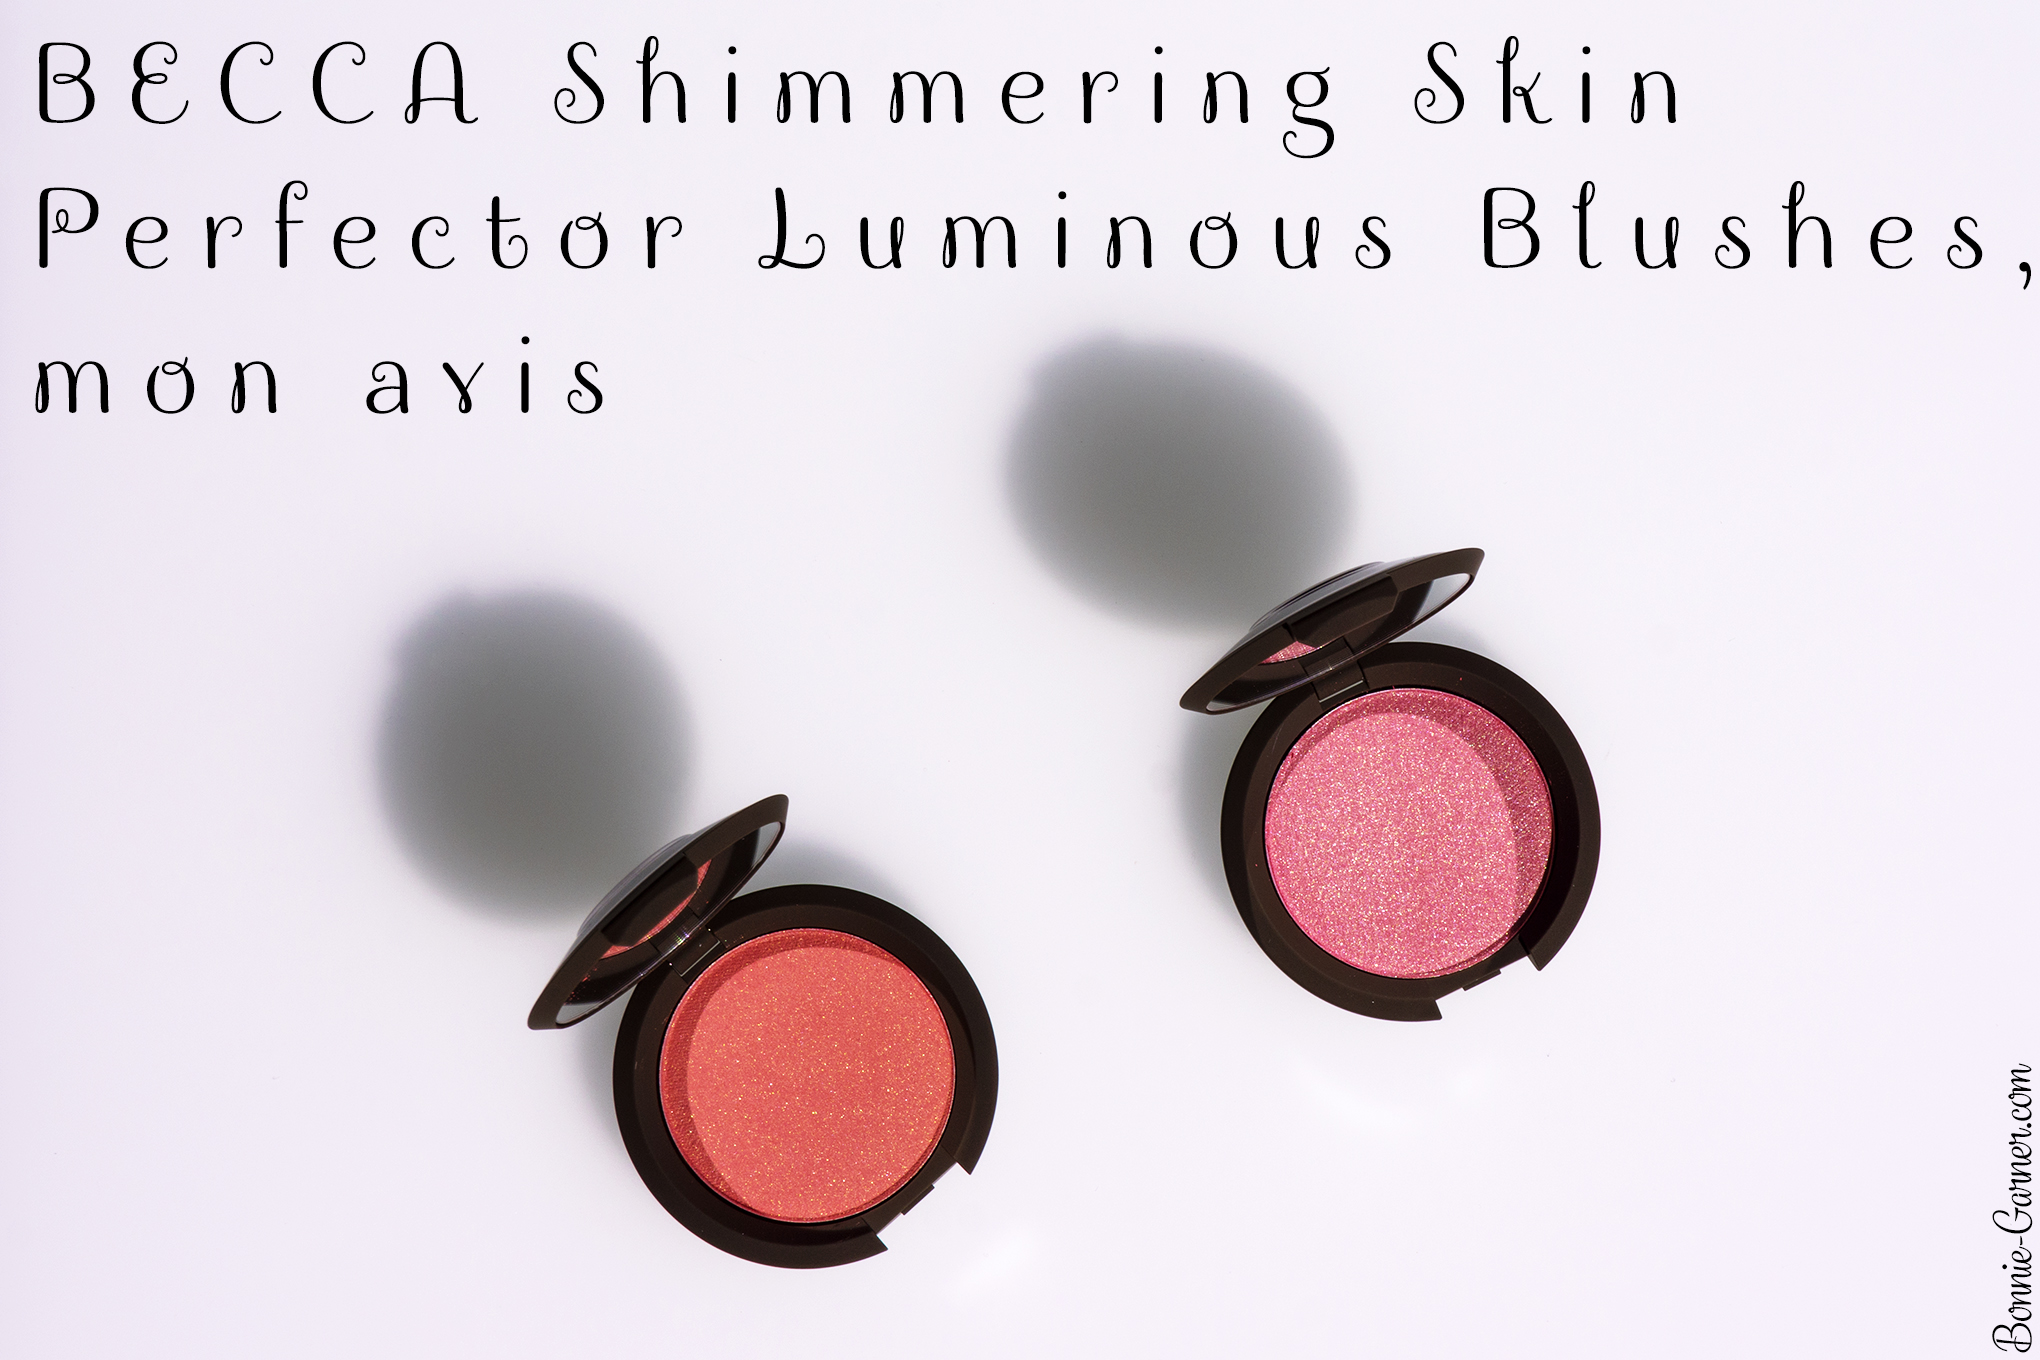 BECCA Shimmering Skin Perfector Luminous Blushes, mon avis